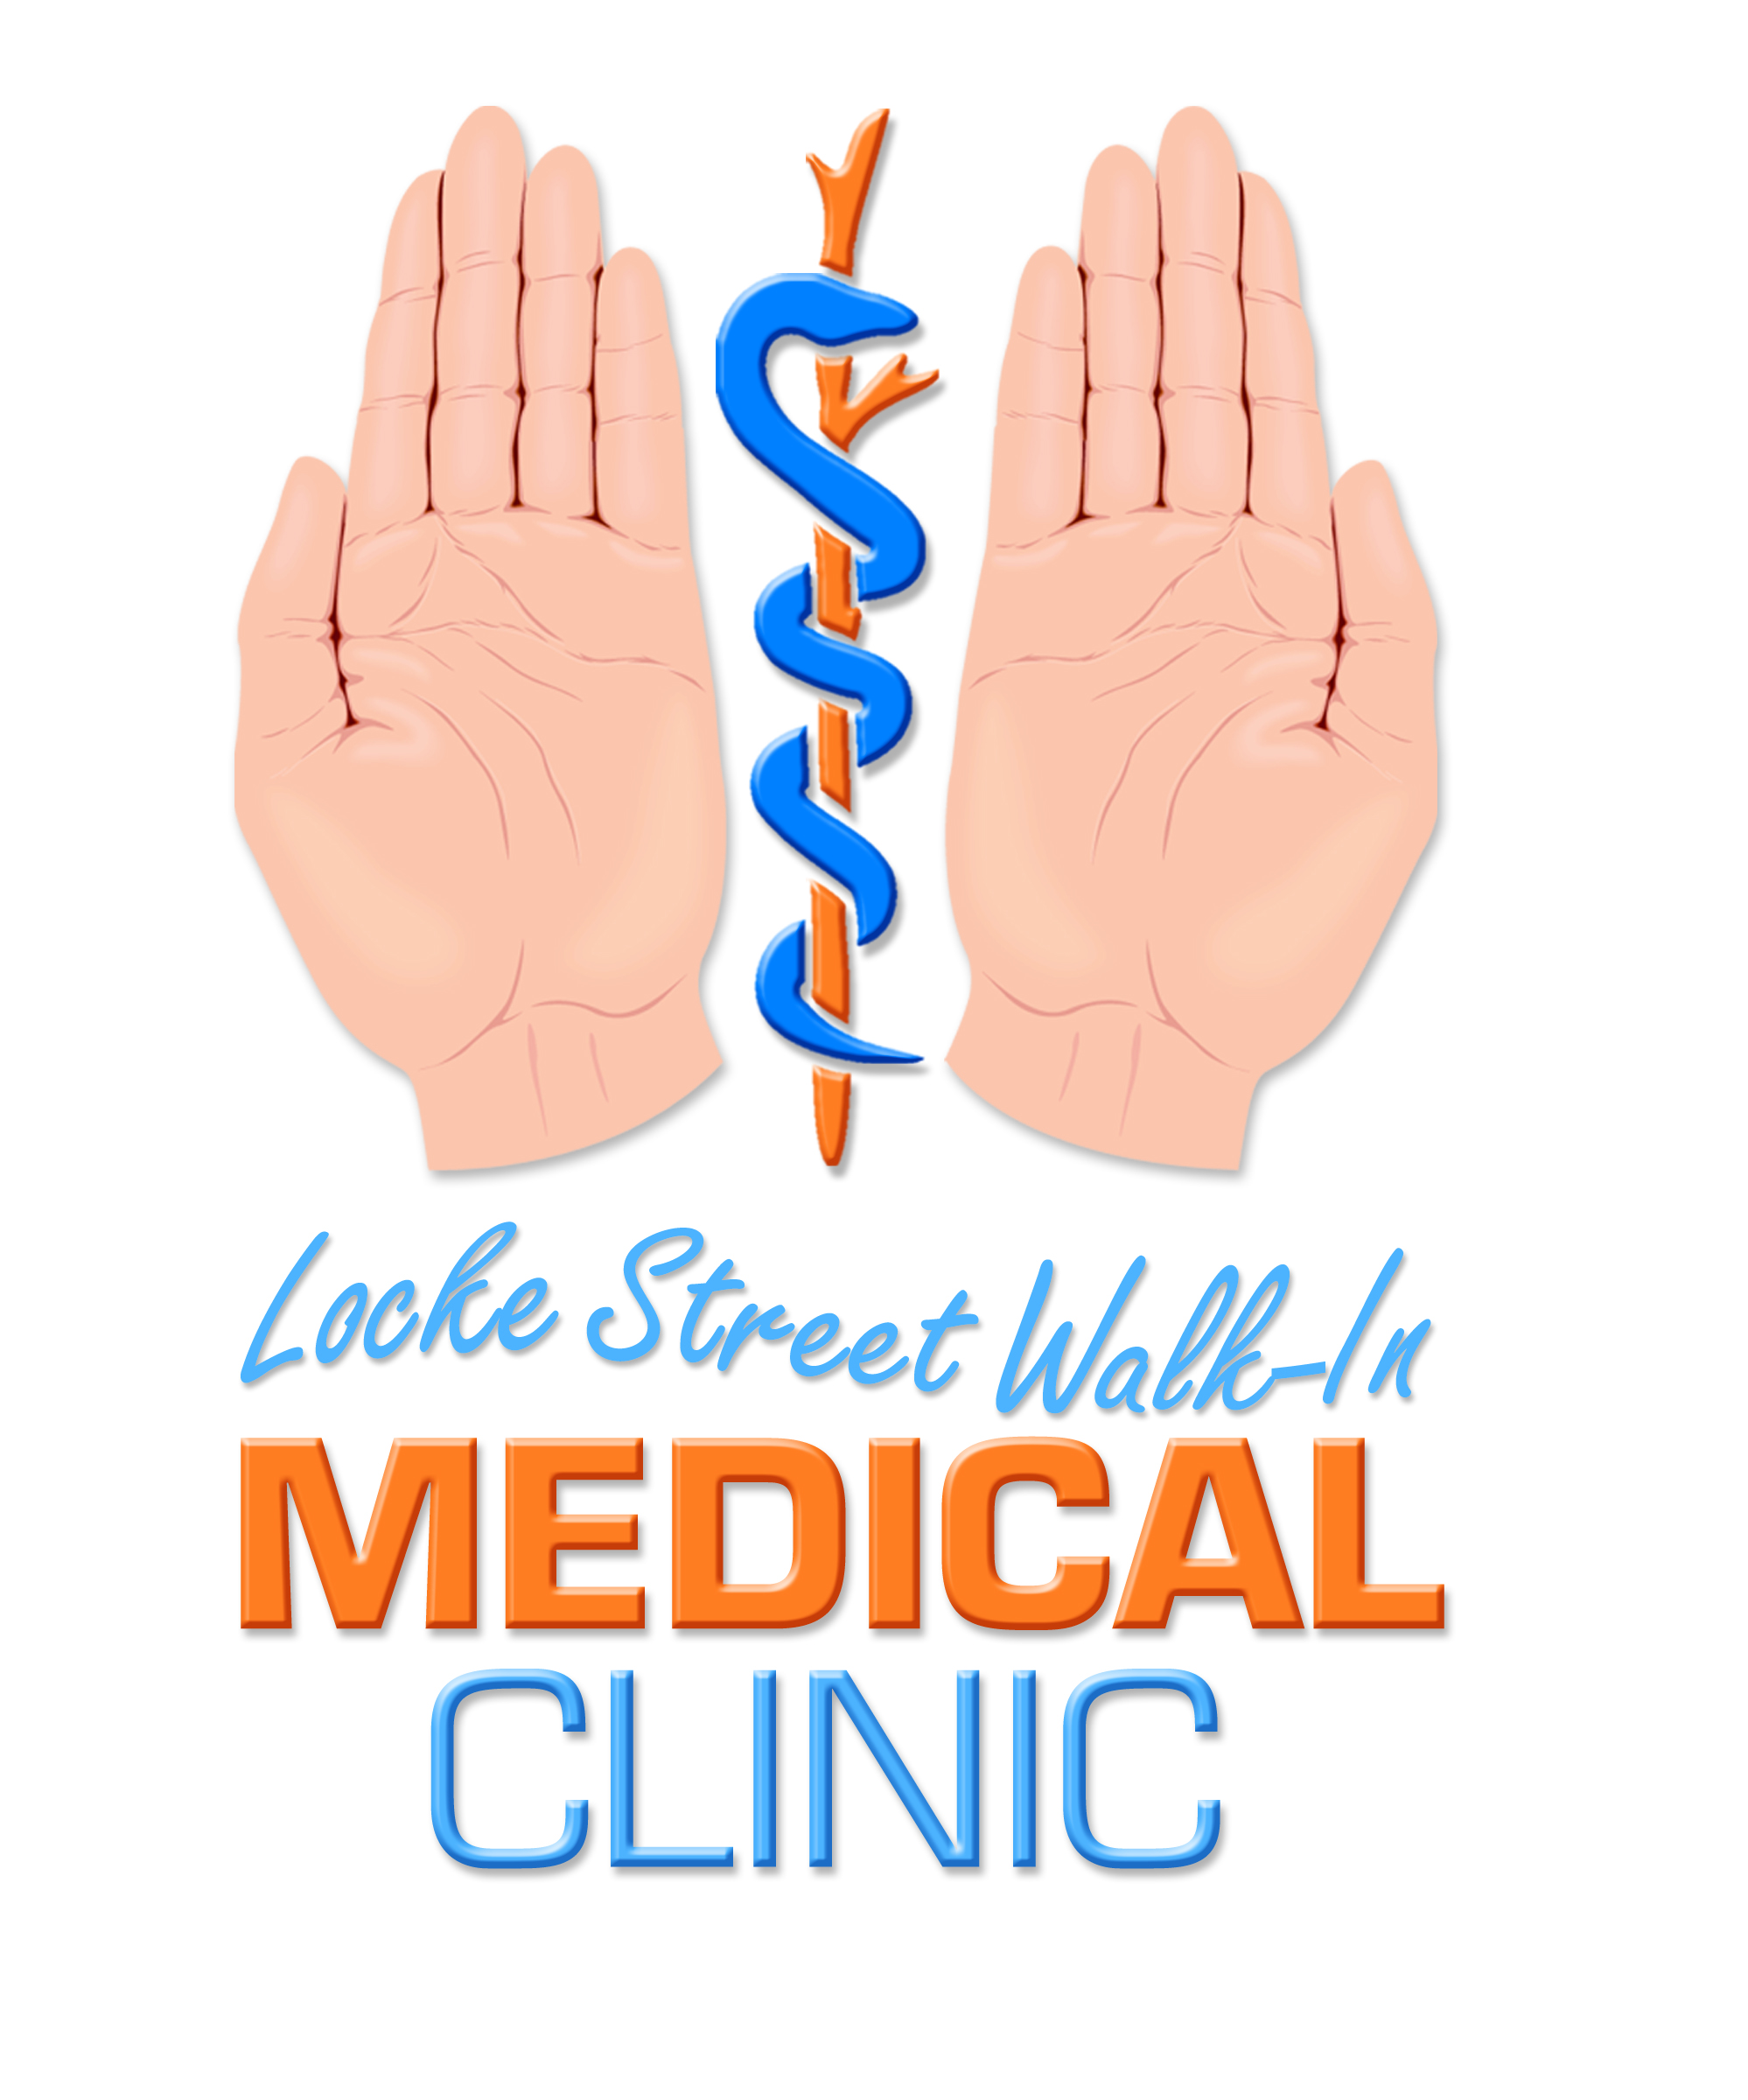  Locke Street Clinic